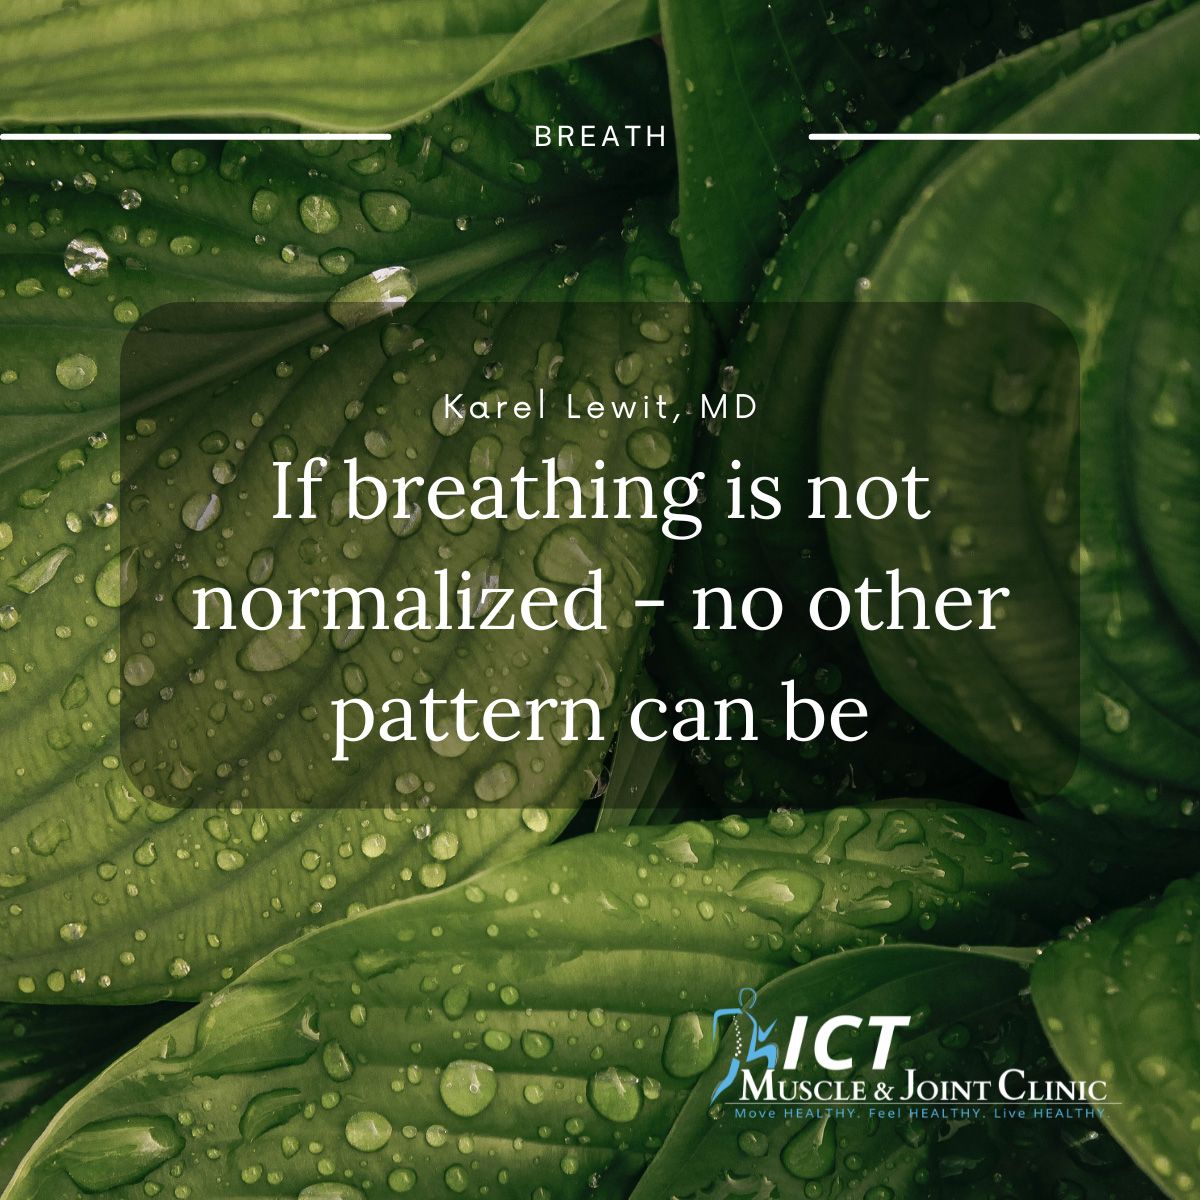 breath restoration quote on graphic